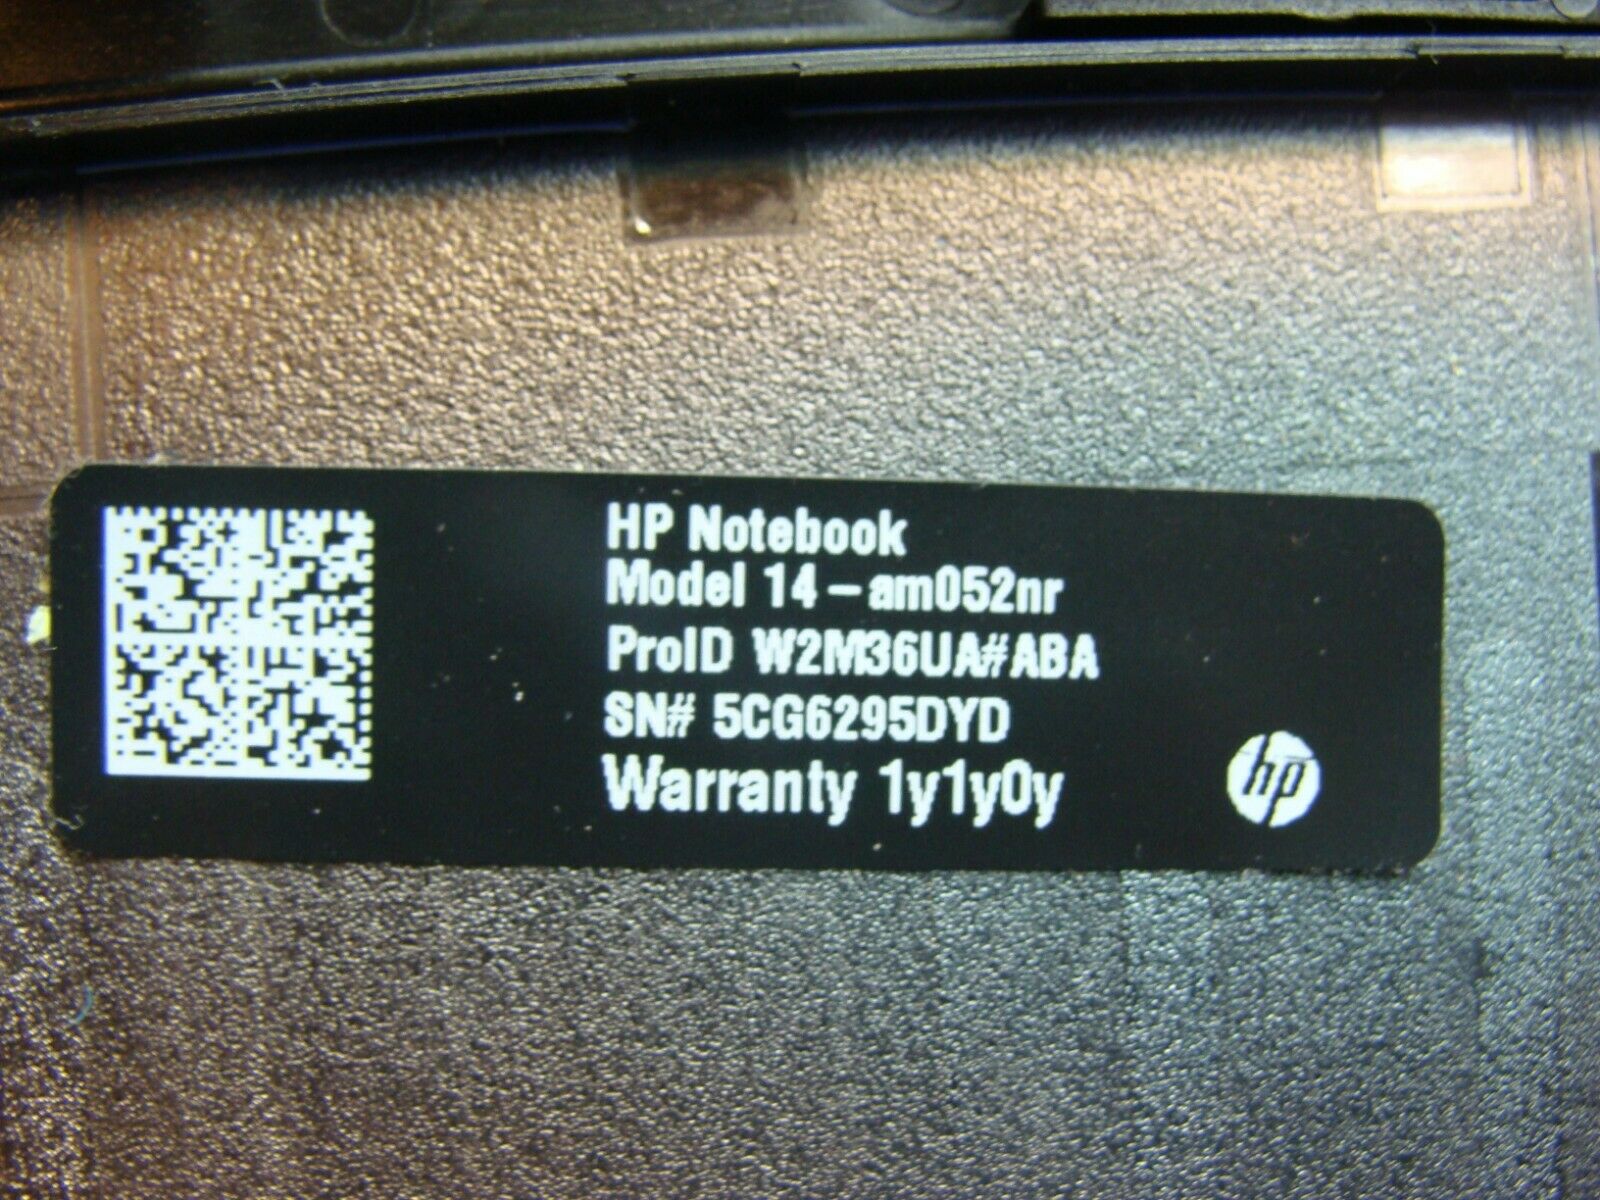 HP 14-am052nr 14